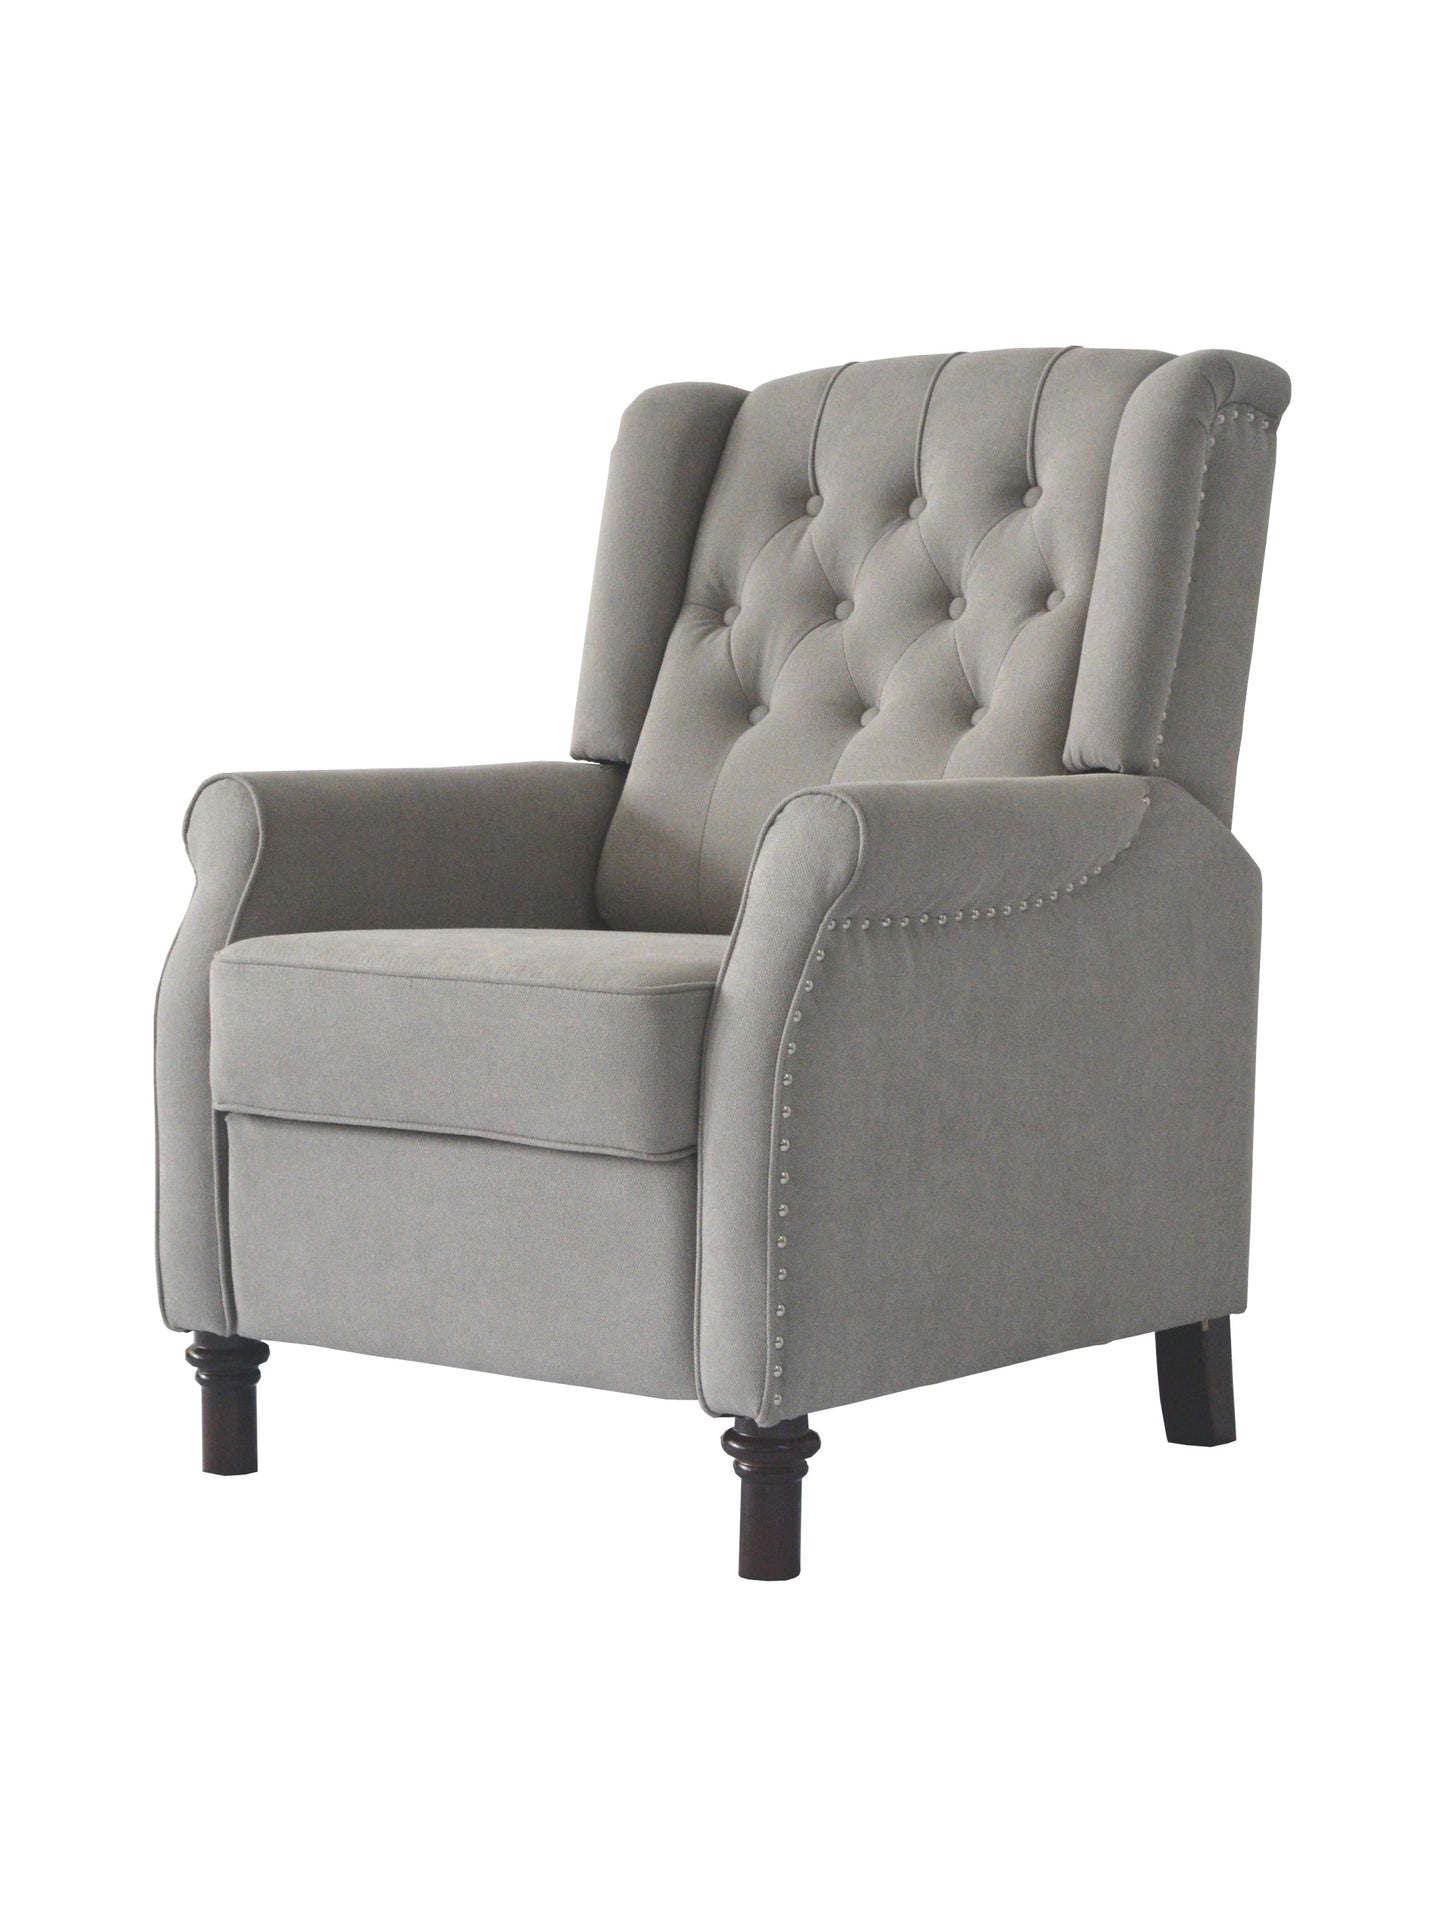 Redde Boo brand new recliner sofa light gray cozy soft living room sofa chair